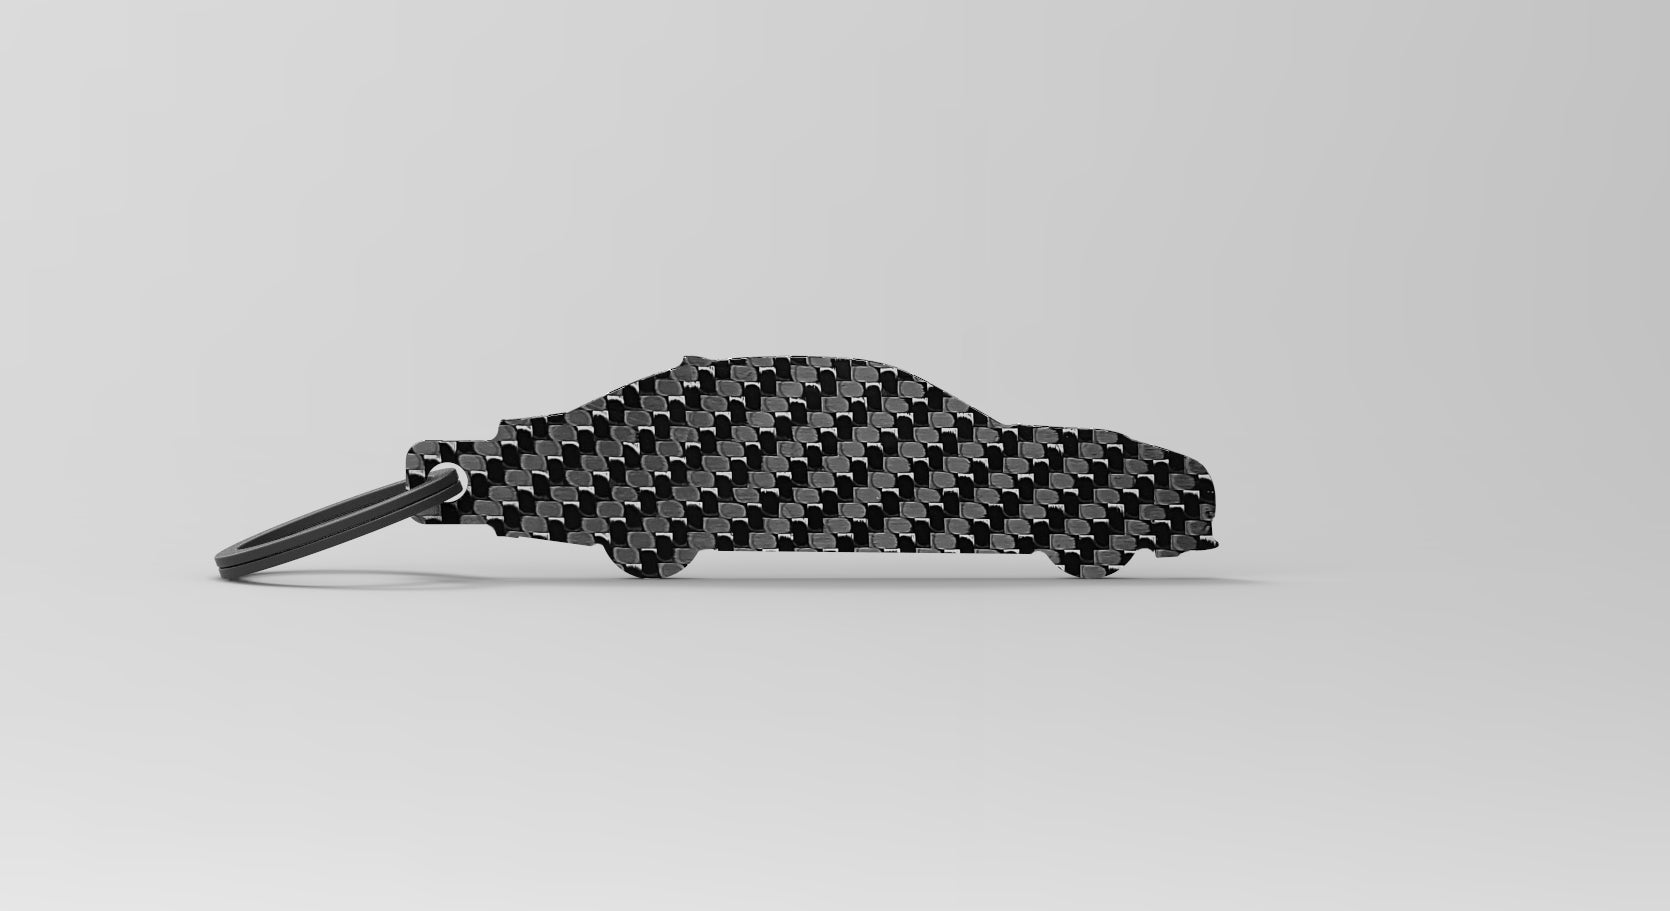 M3 (E92) silhouette carbon fiber keychain 